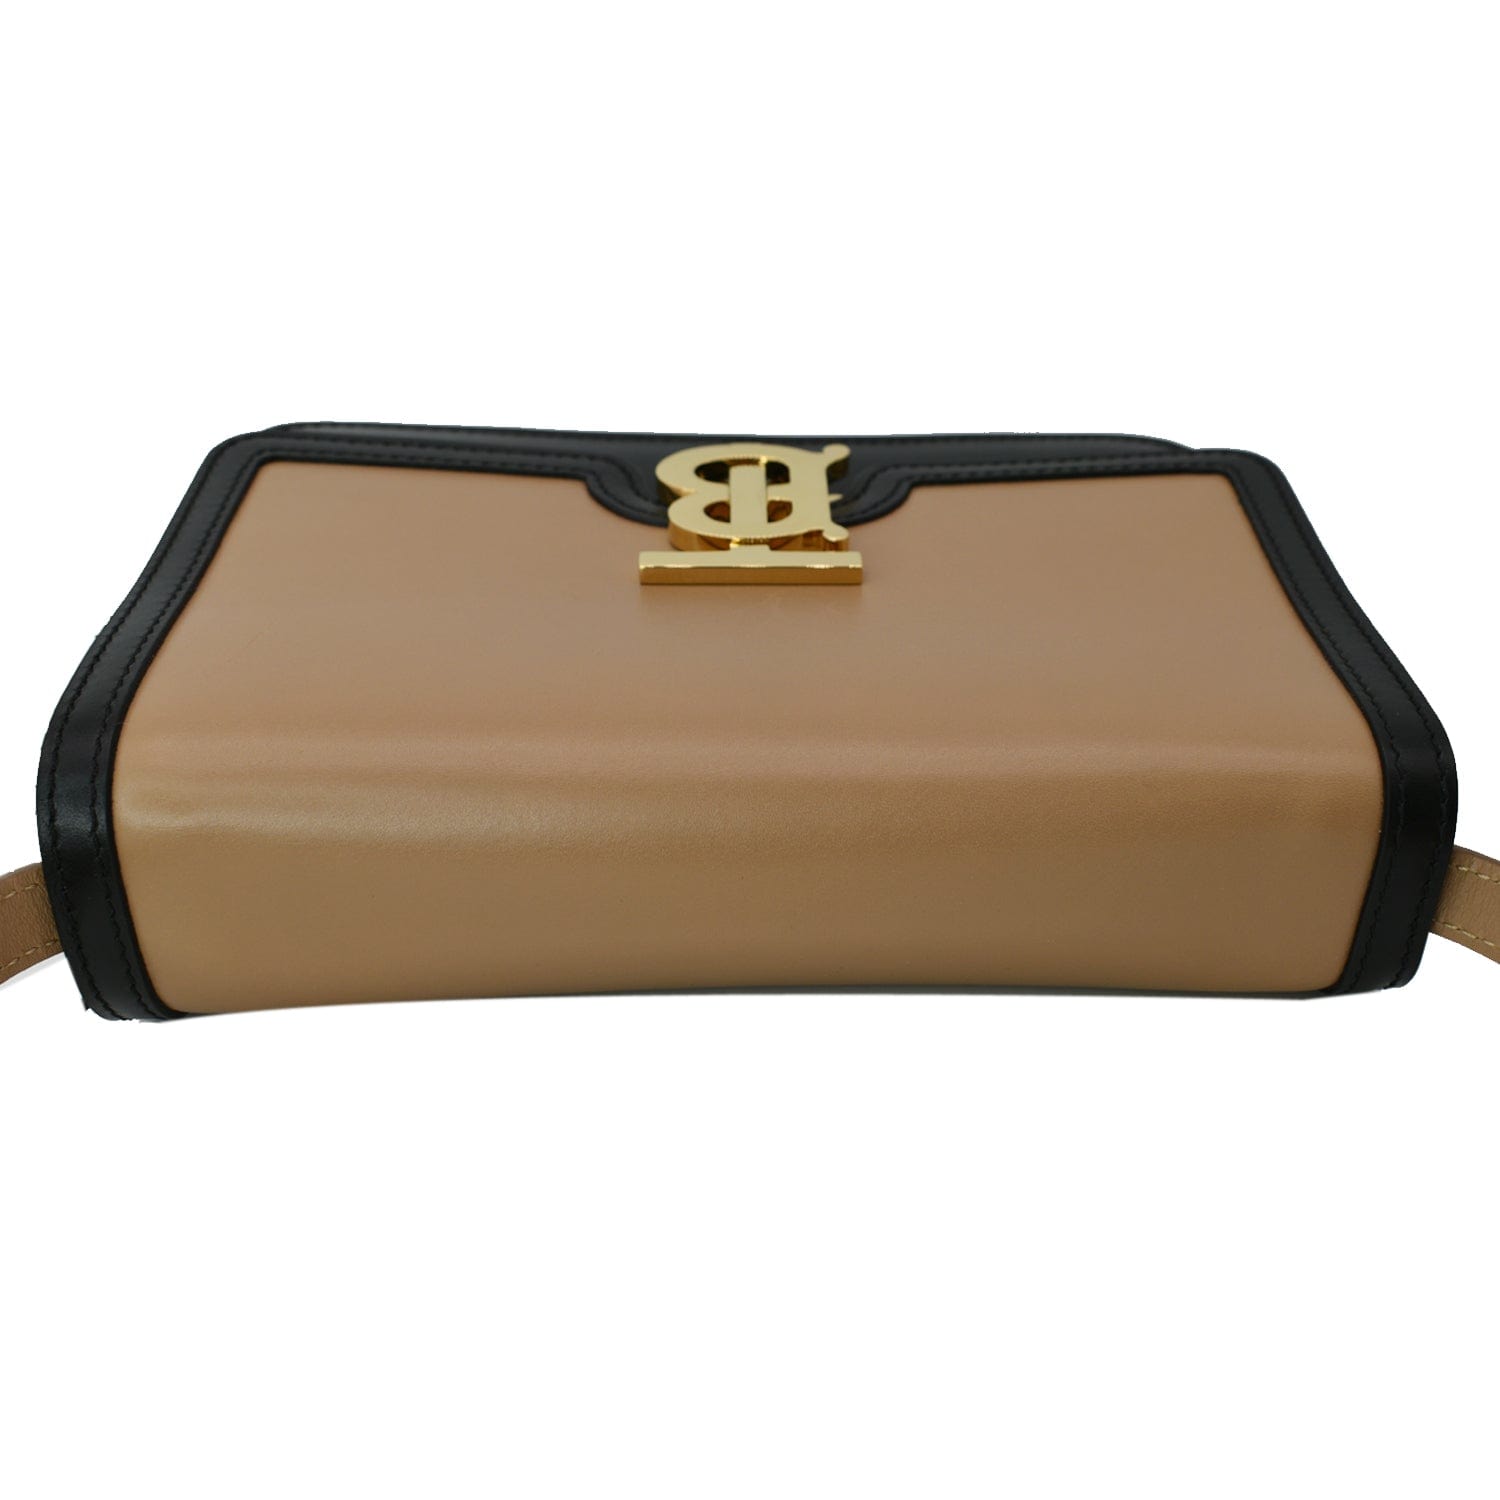 Burberry: Beige & Brown TB Bag